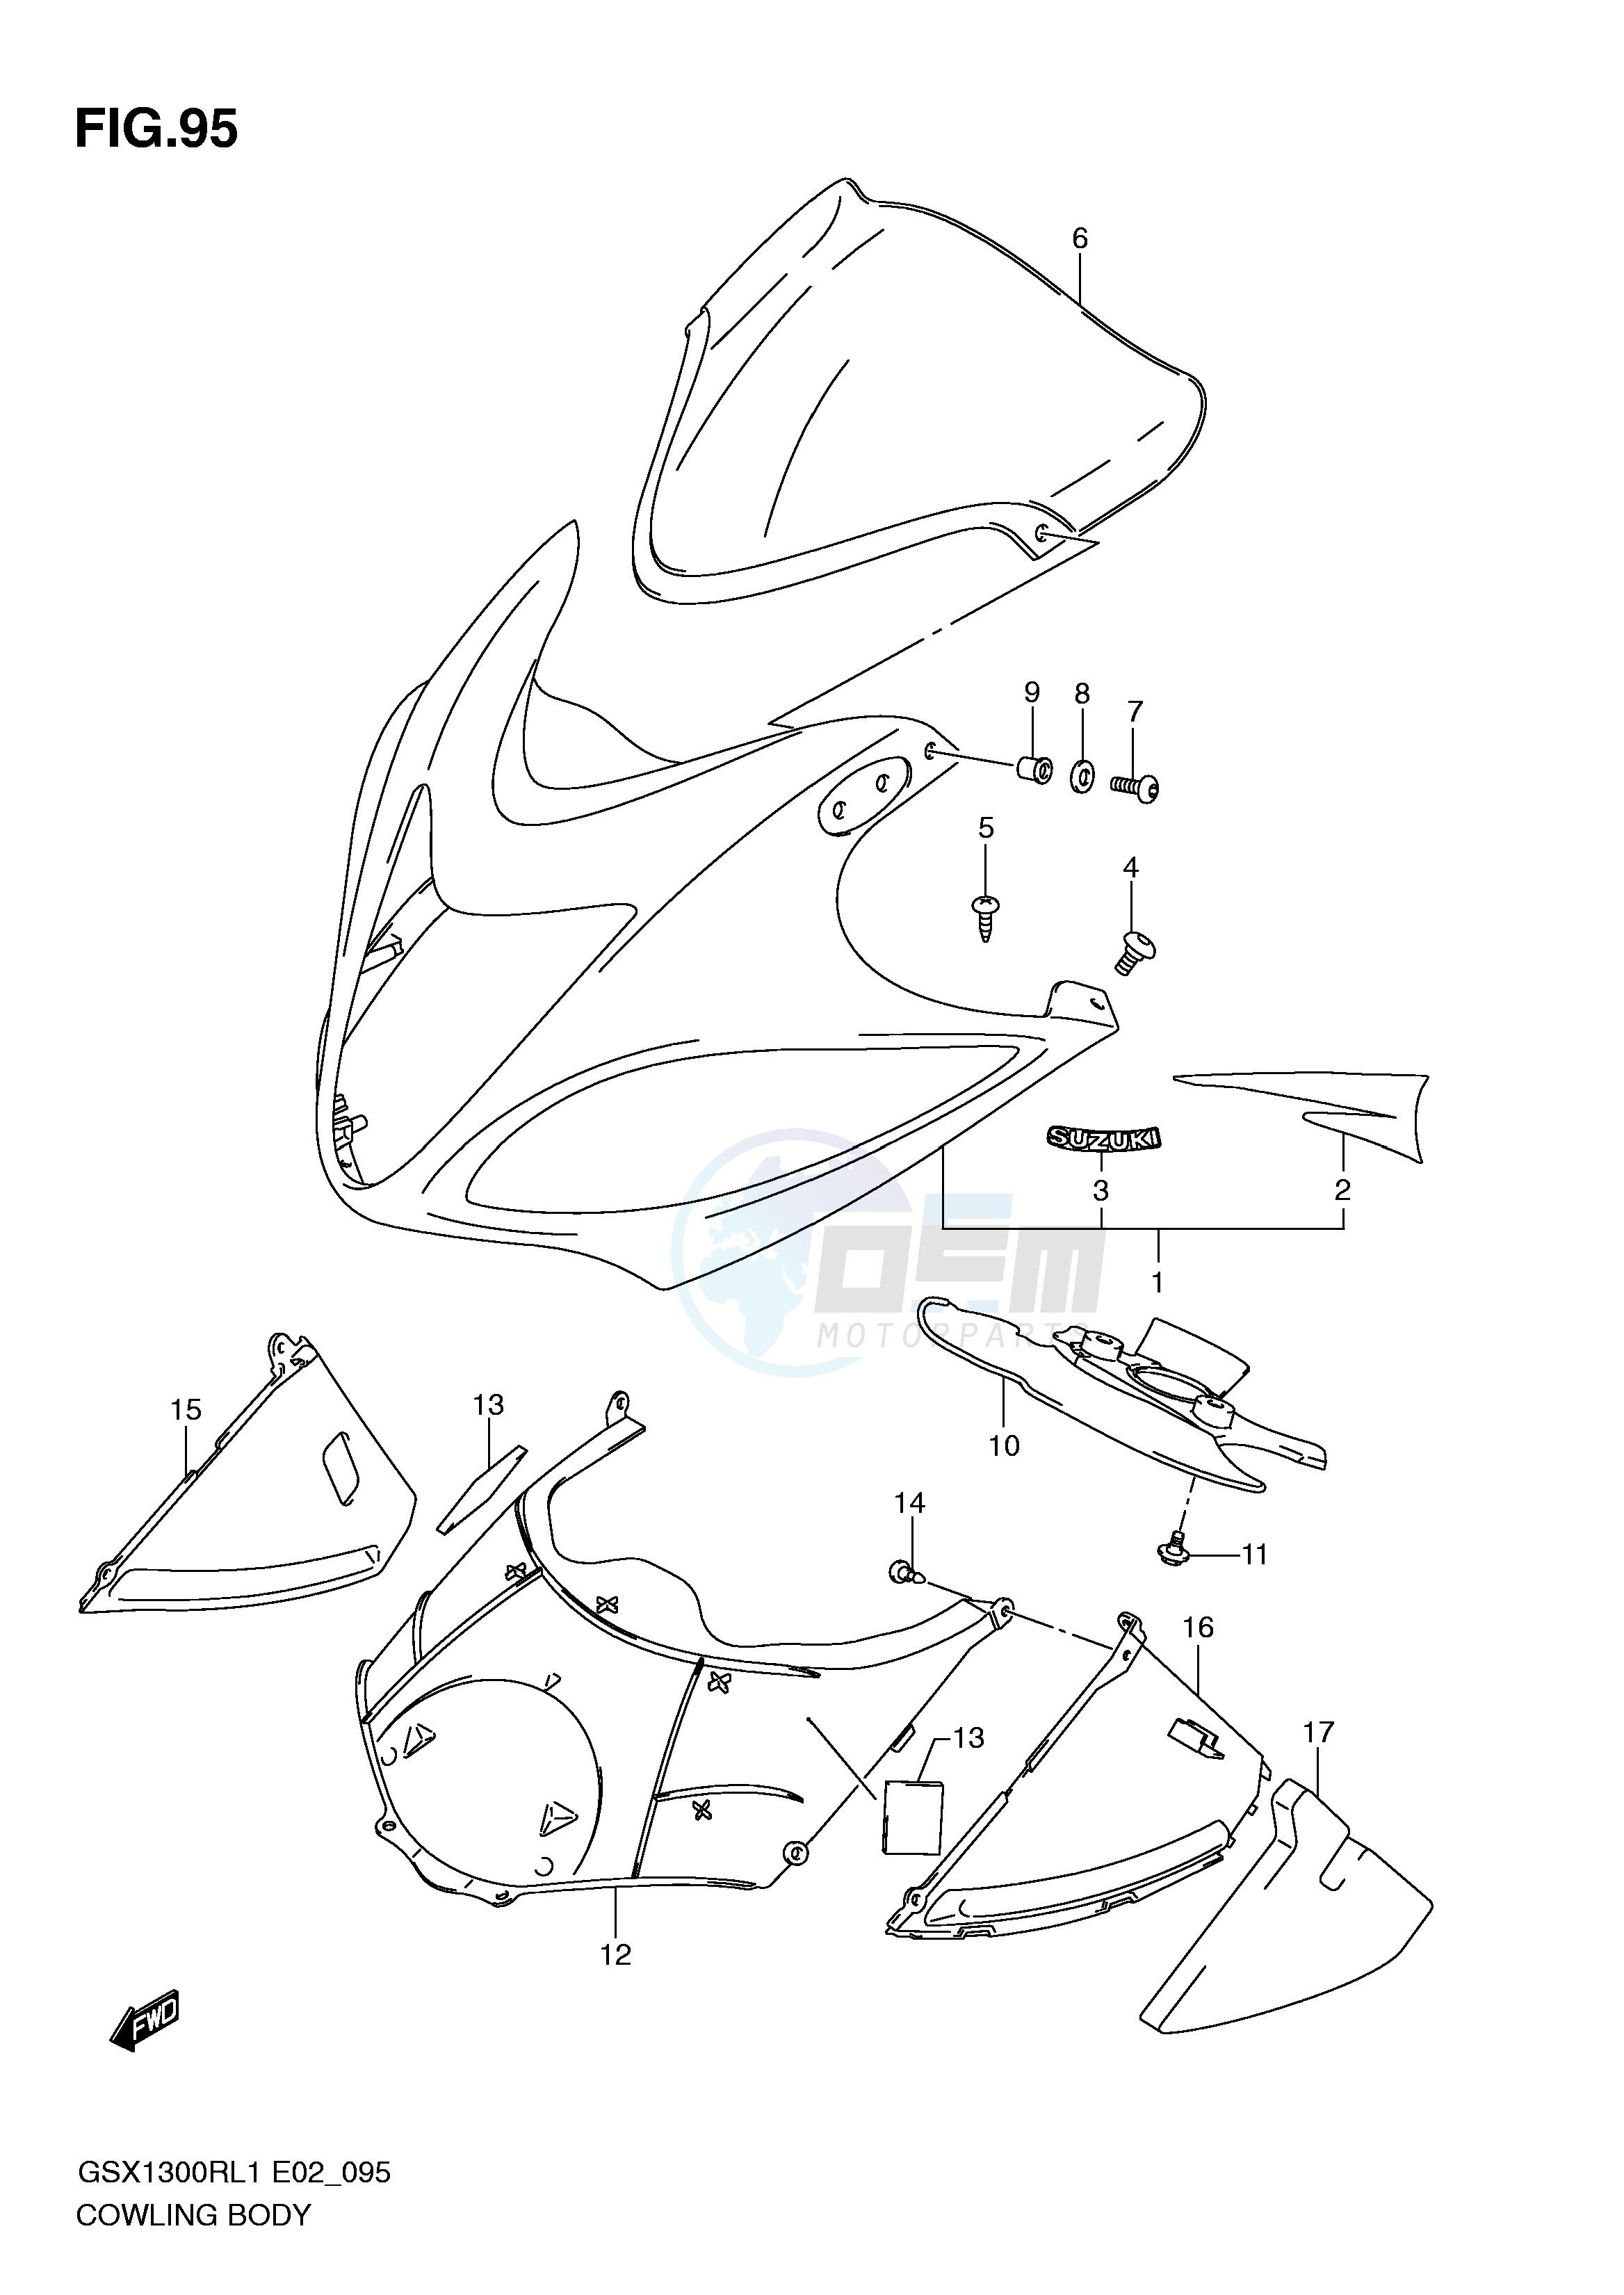 COWLING BODY (GSX1300RL1 E51) blueprint